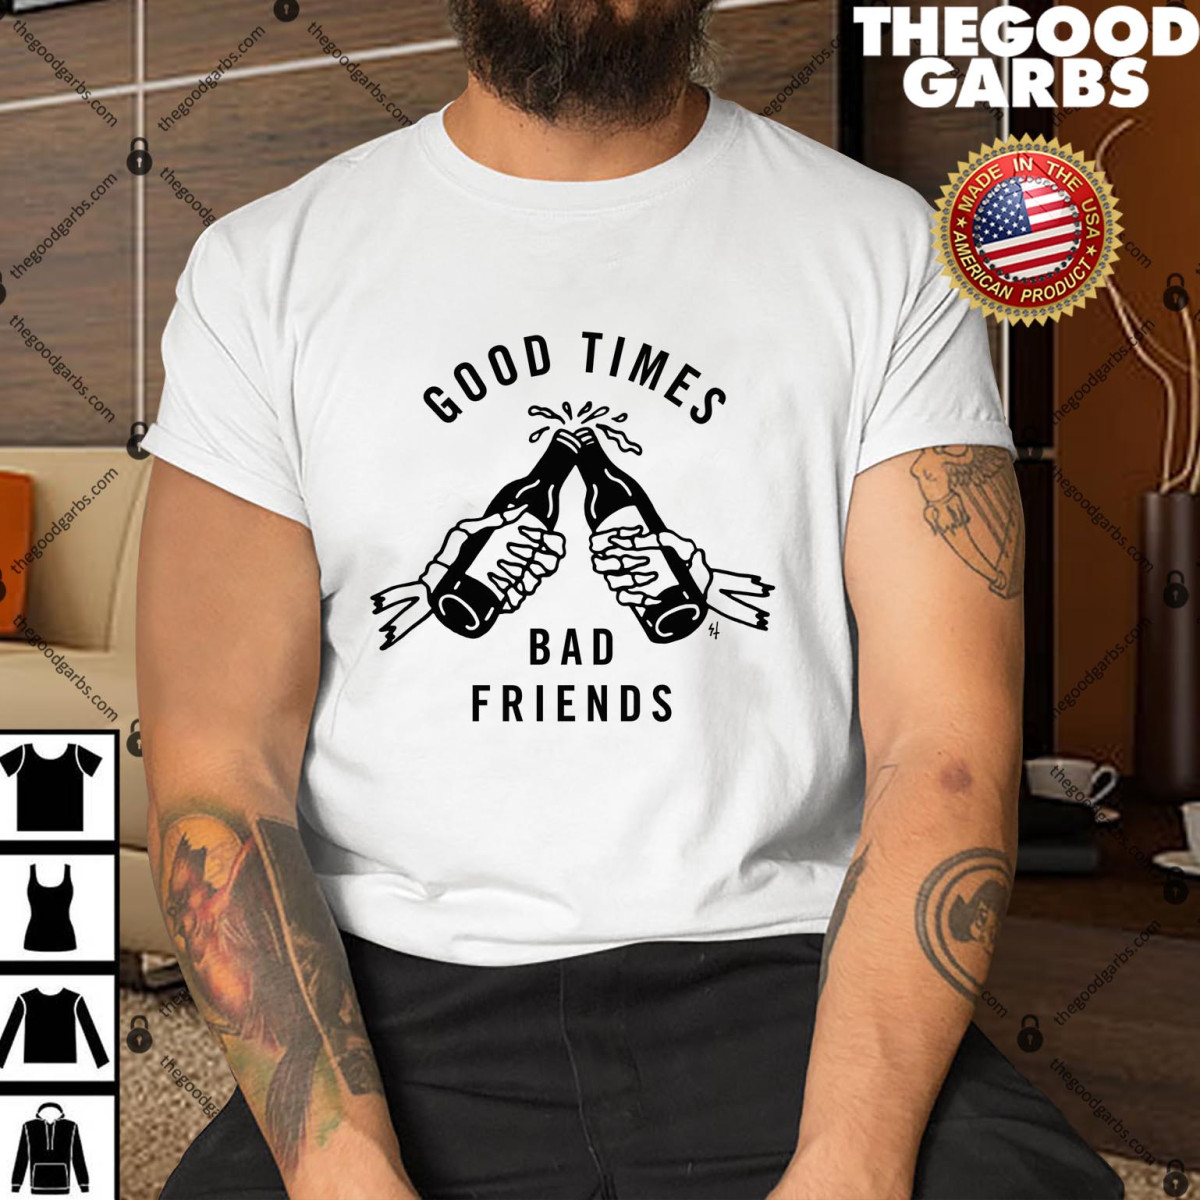 Good Times Bad Friends Tee Shirt